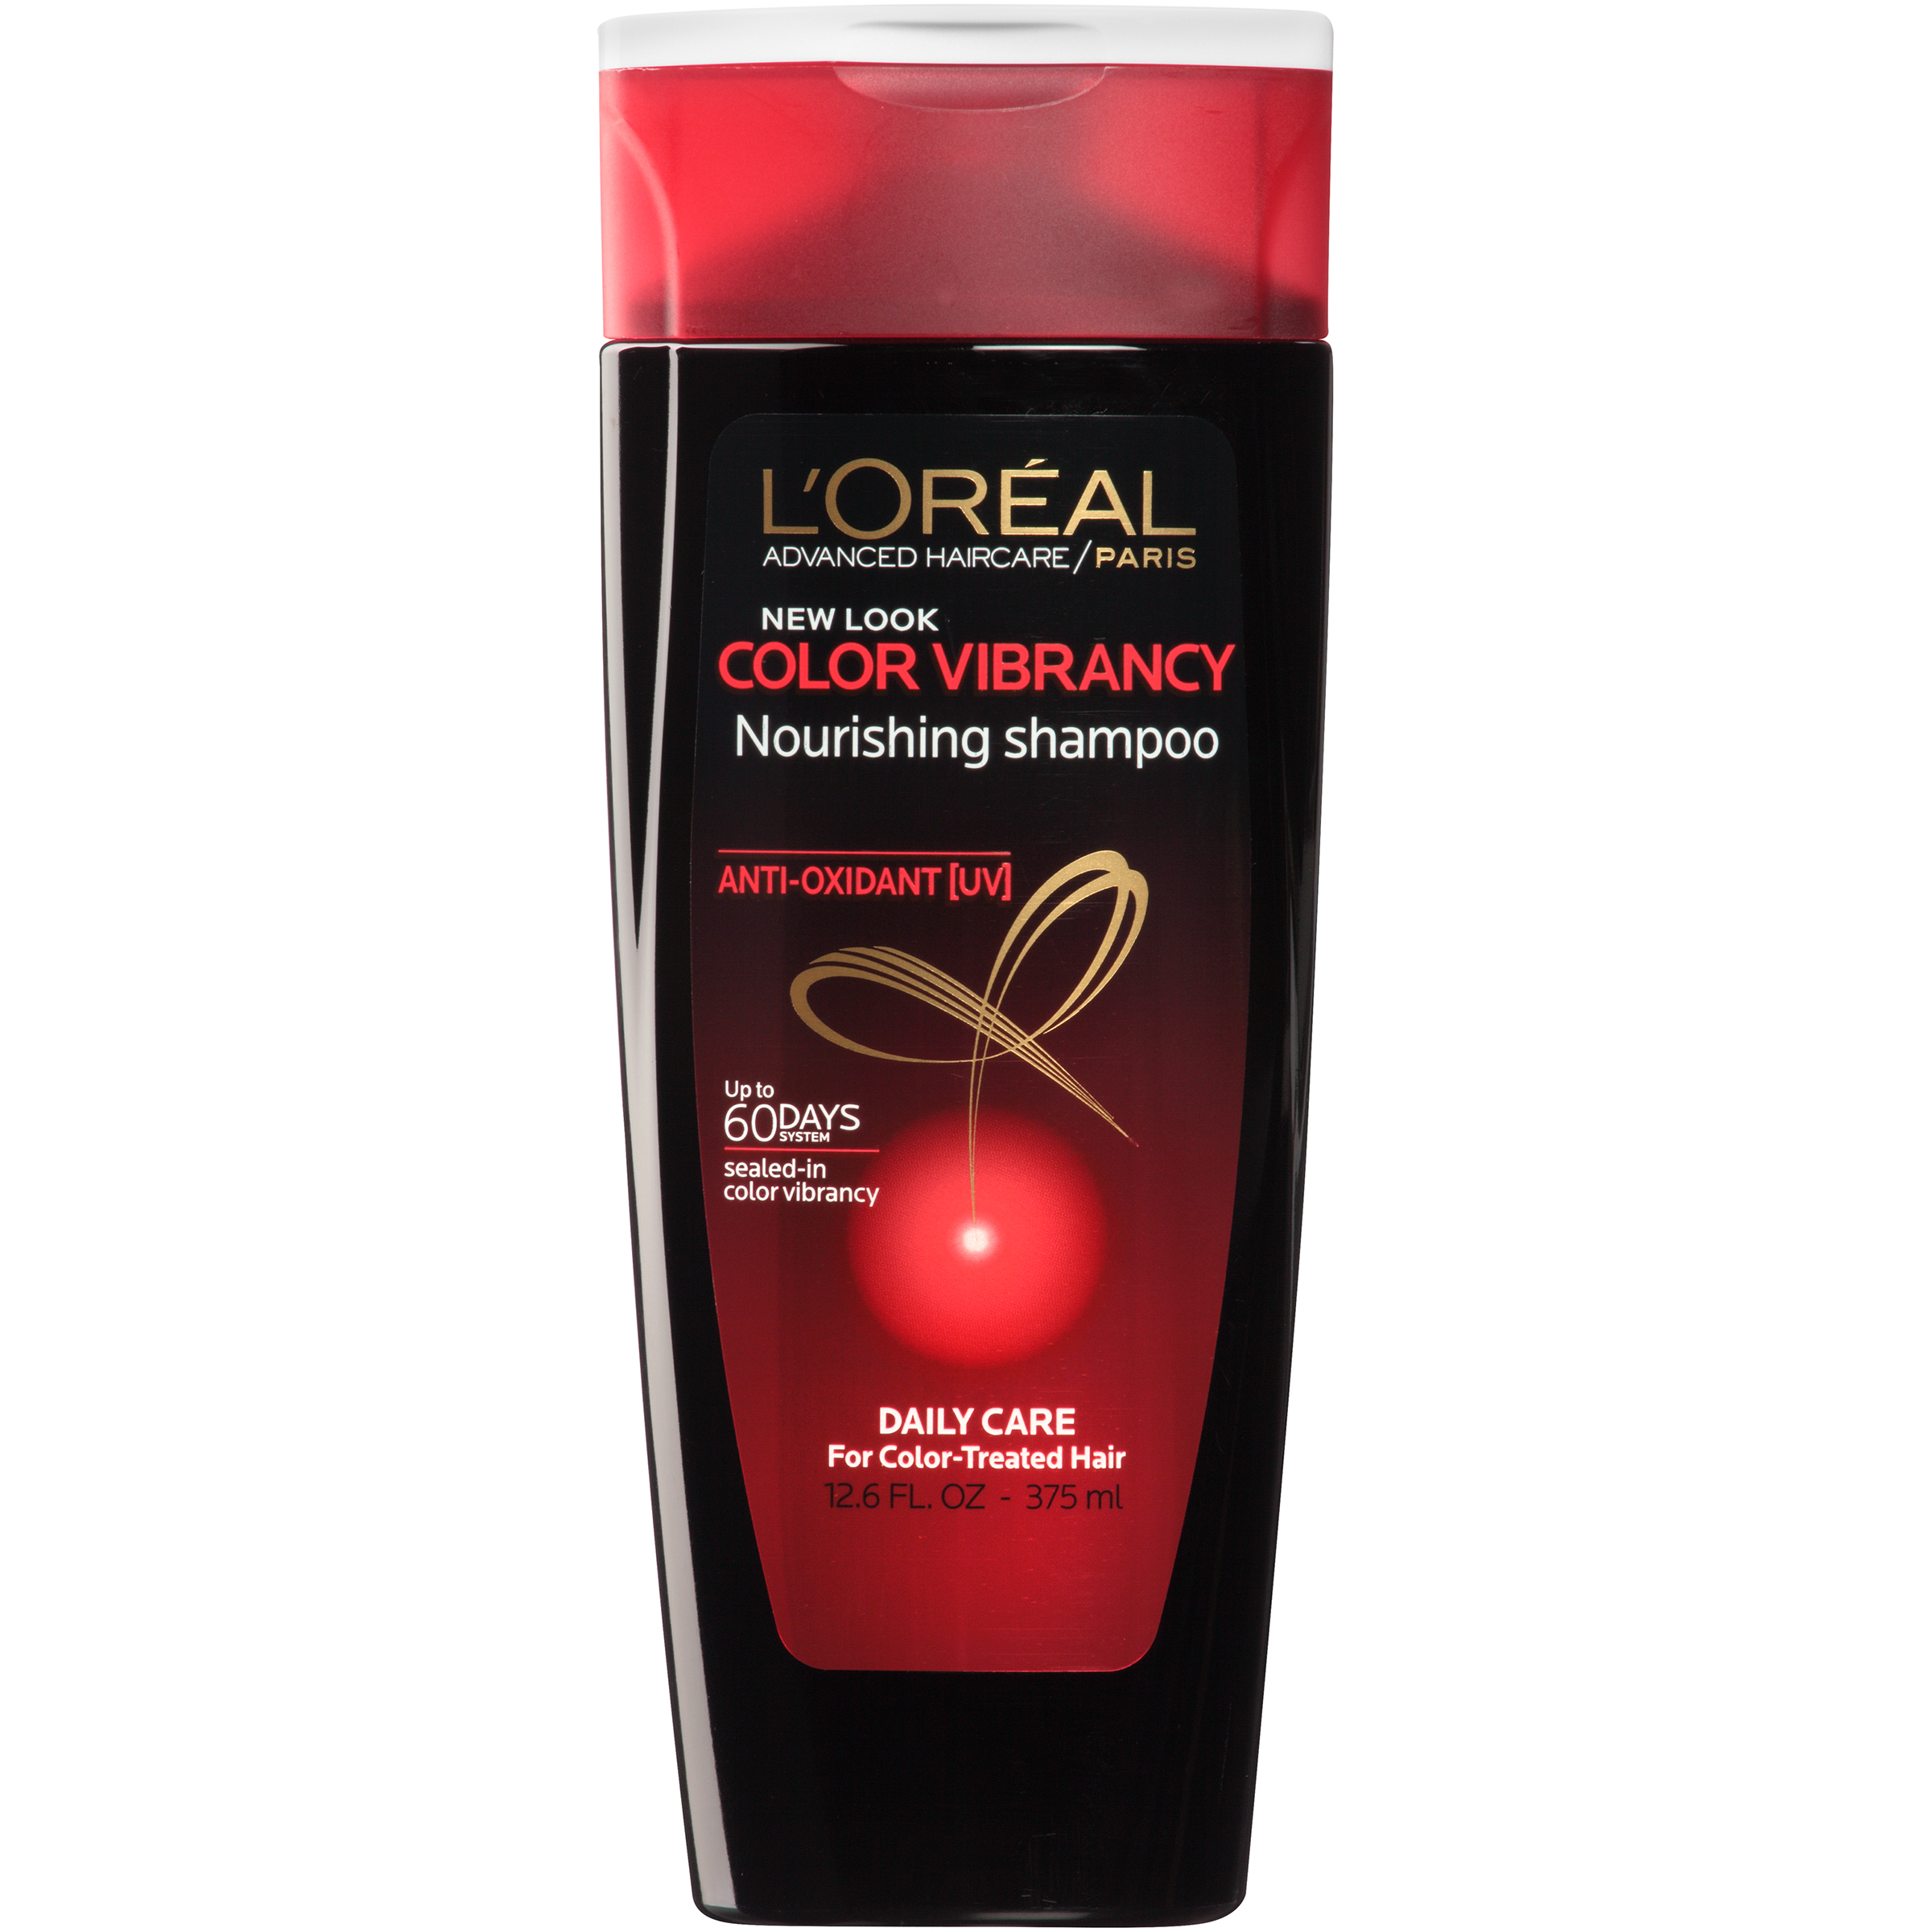 L'Oreal Advanced Haircare Color Vibrancy Nourishing Shampoo, 12.6 fl oz